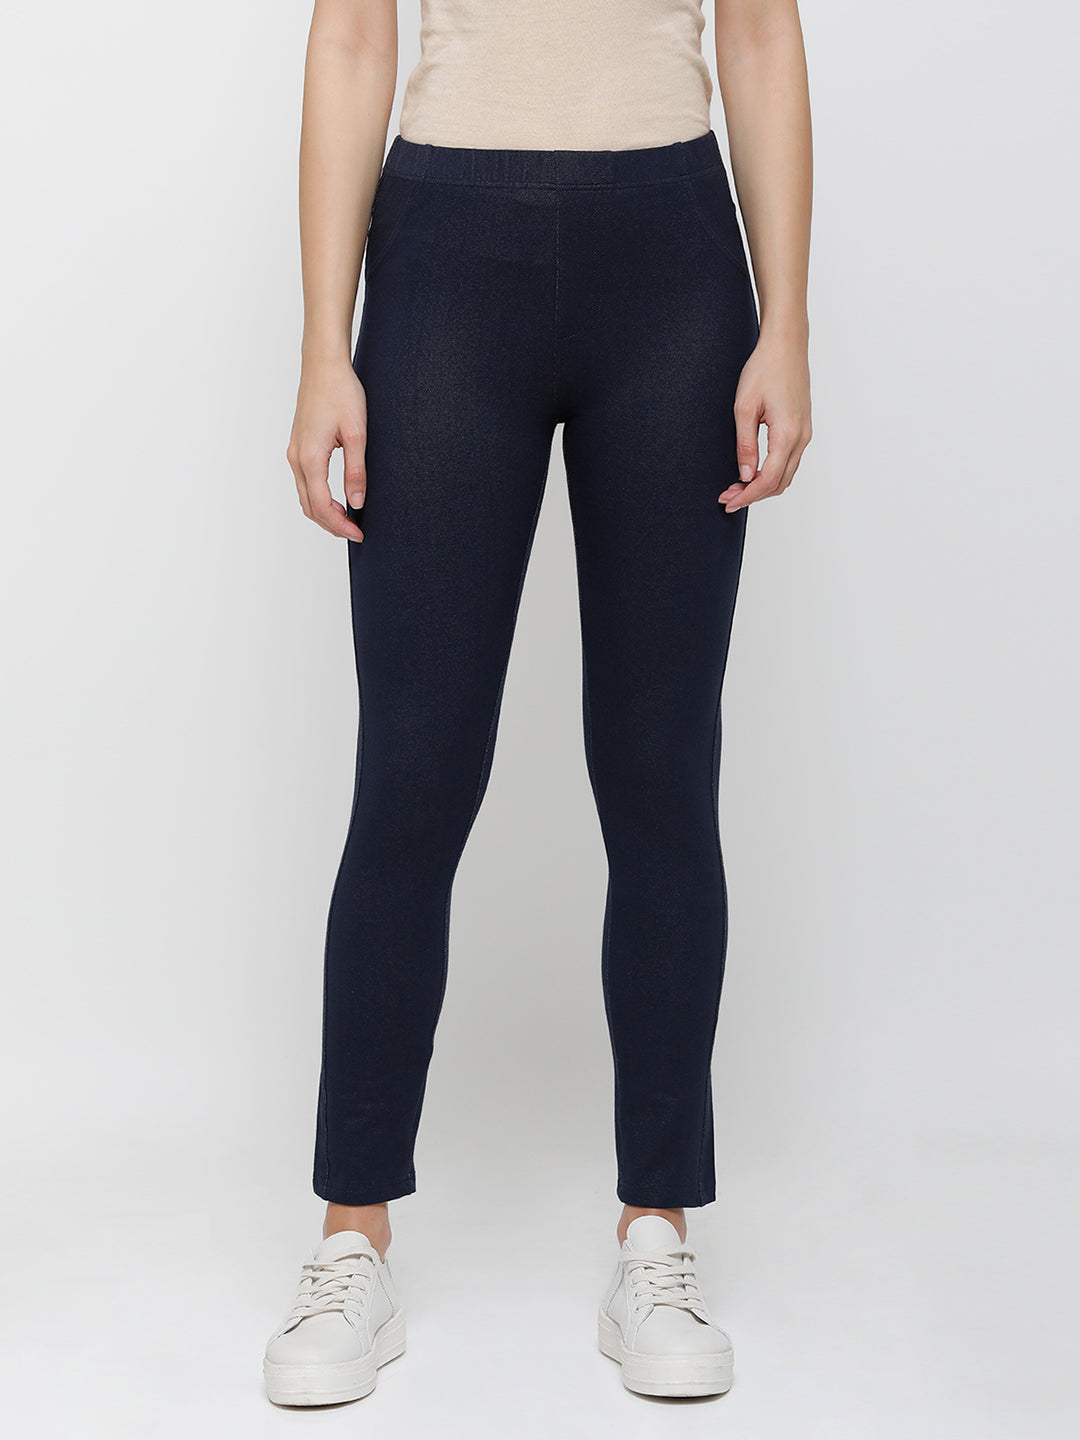 High Waist Women's Denim Print Fake Faux Jeans Leggings Pants | eBay